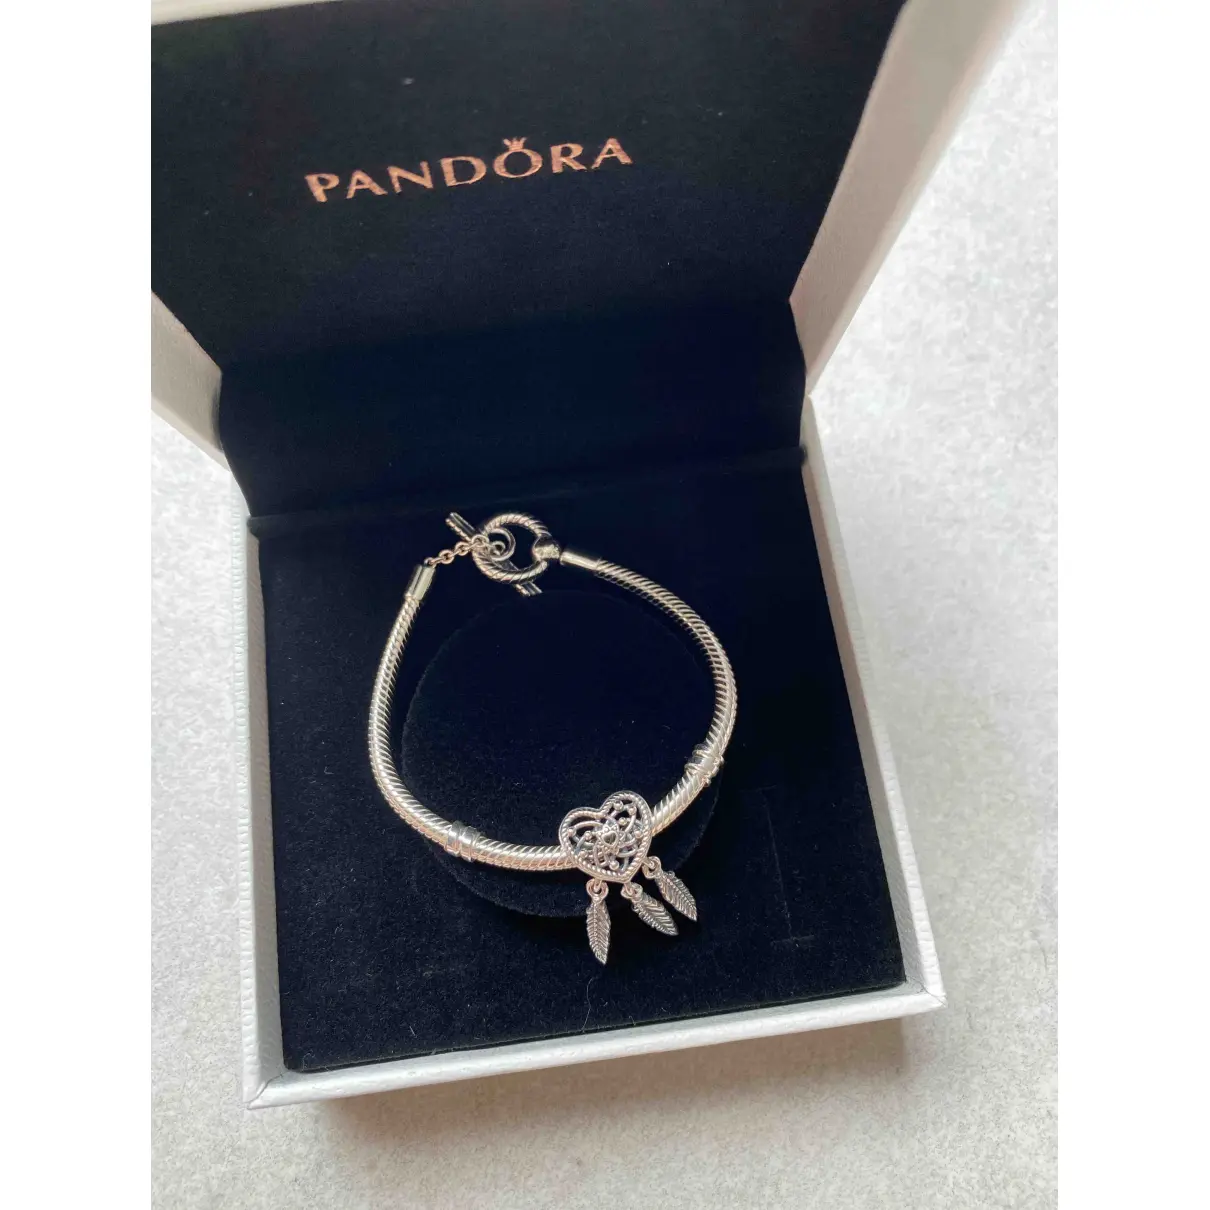 Buy Pandora Silver Silver Plated Bracelet online